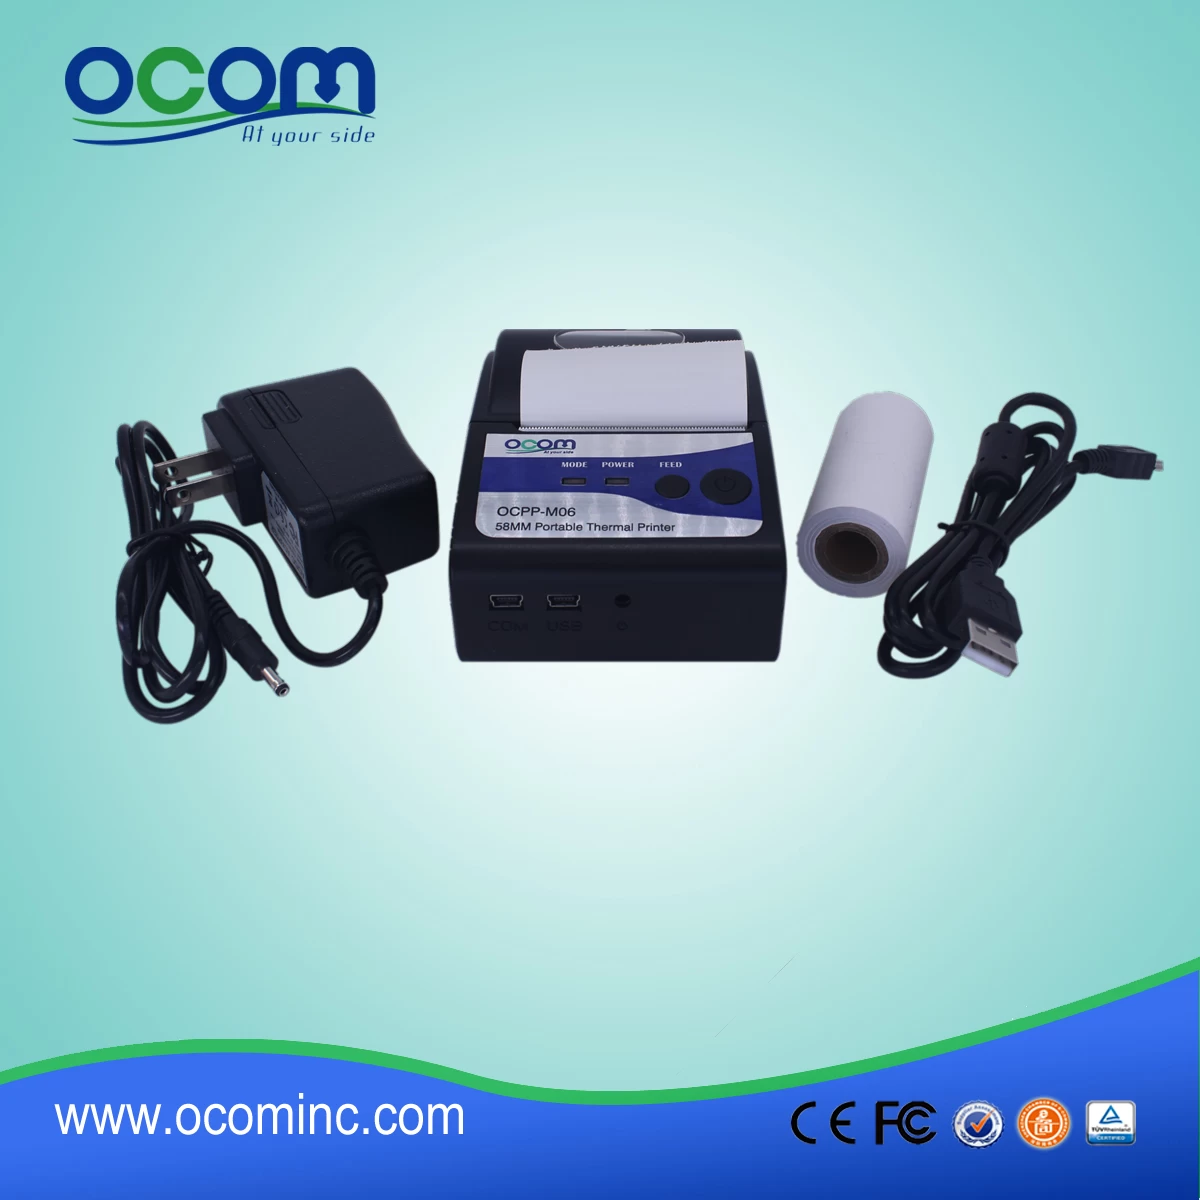 qr code printer mini portable printer factory (OCPP-M06)